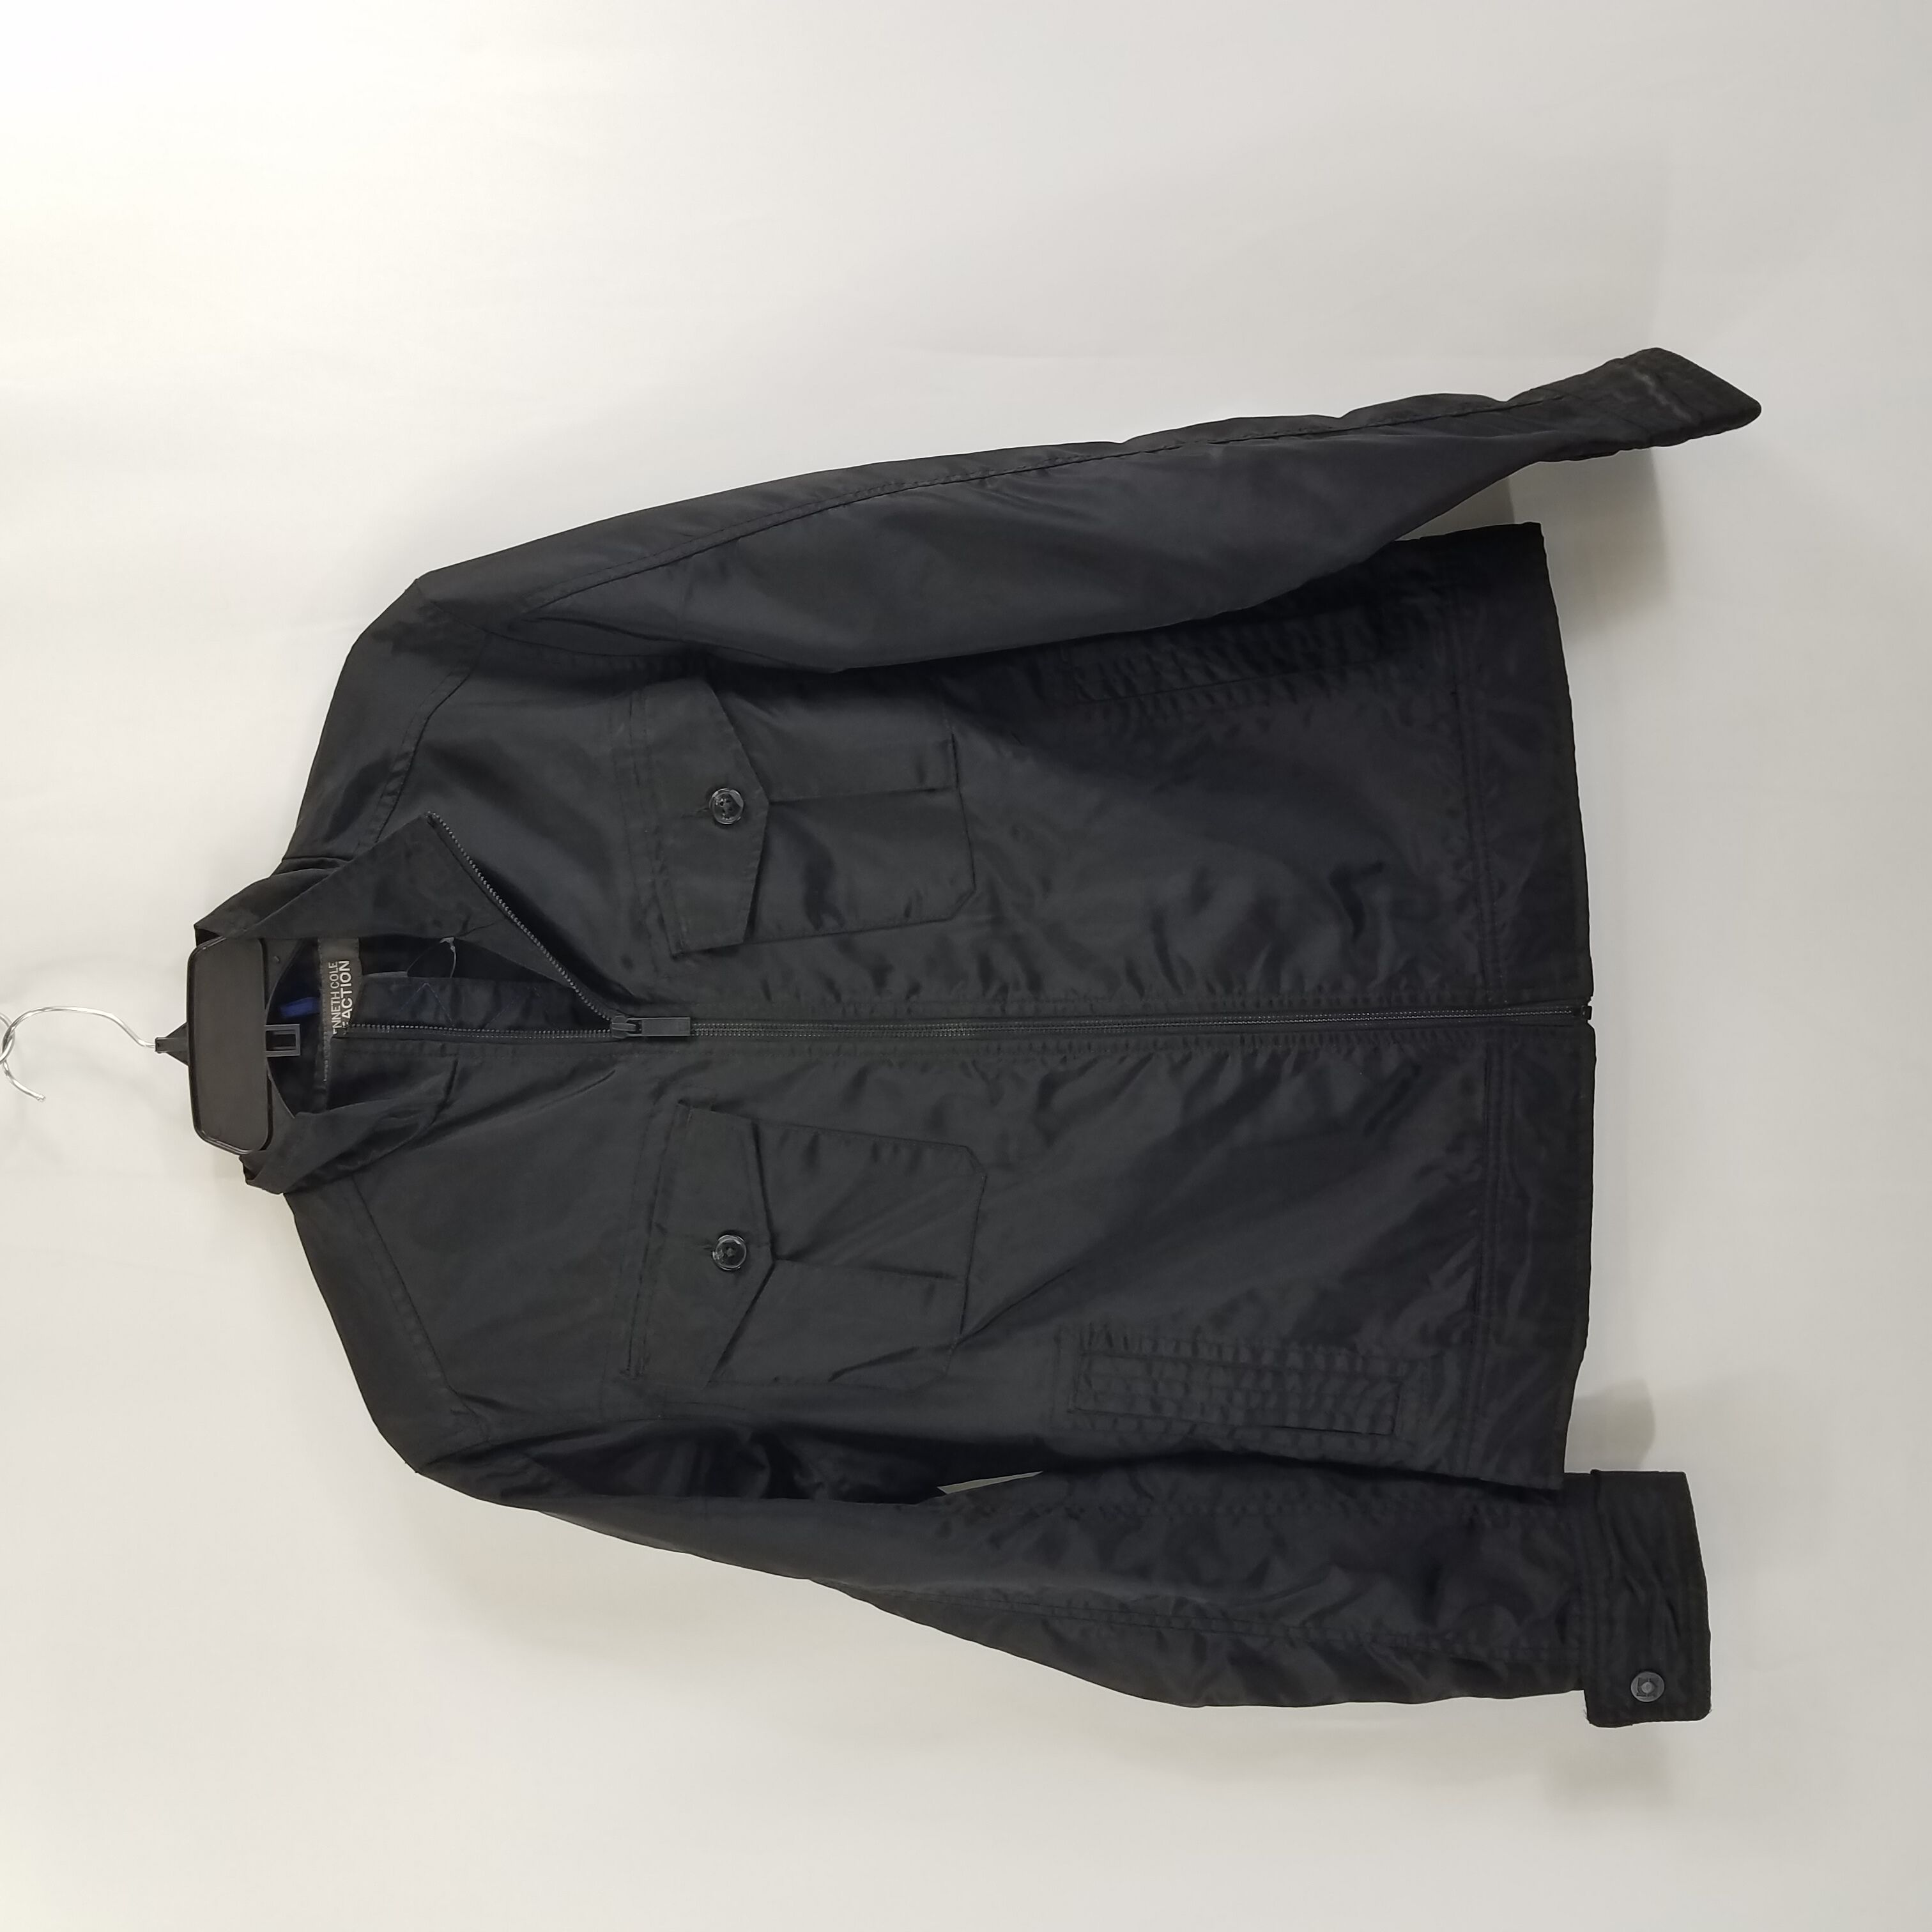 Buy Kenneth Cole New York Men's Cotton Jacket, Khaki, Medium at Amazon.in